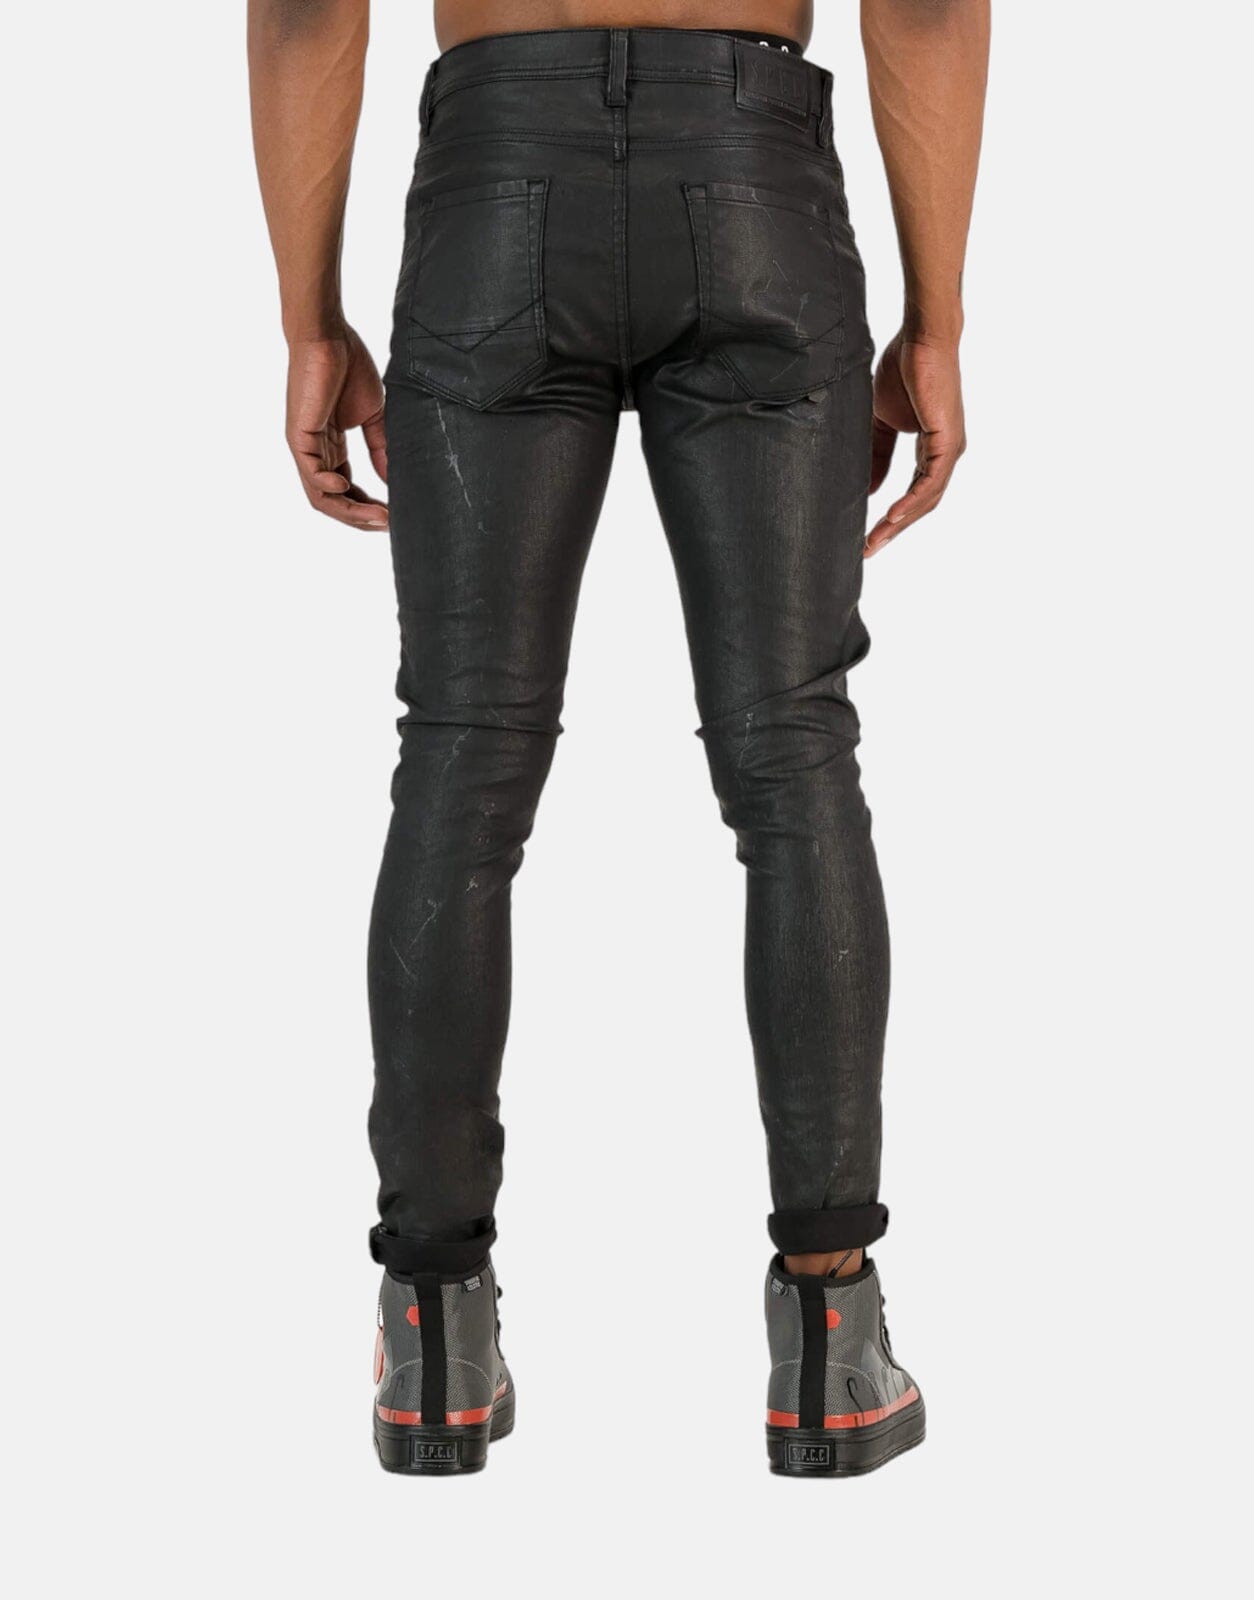 SPCC Moonraker Black Jeans